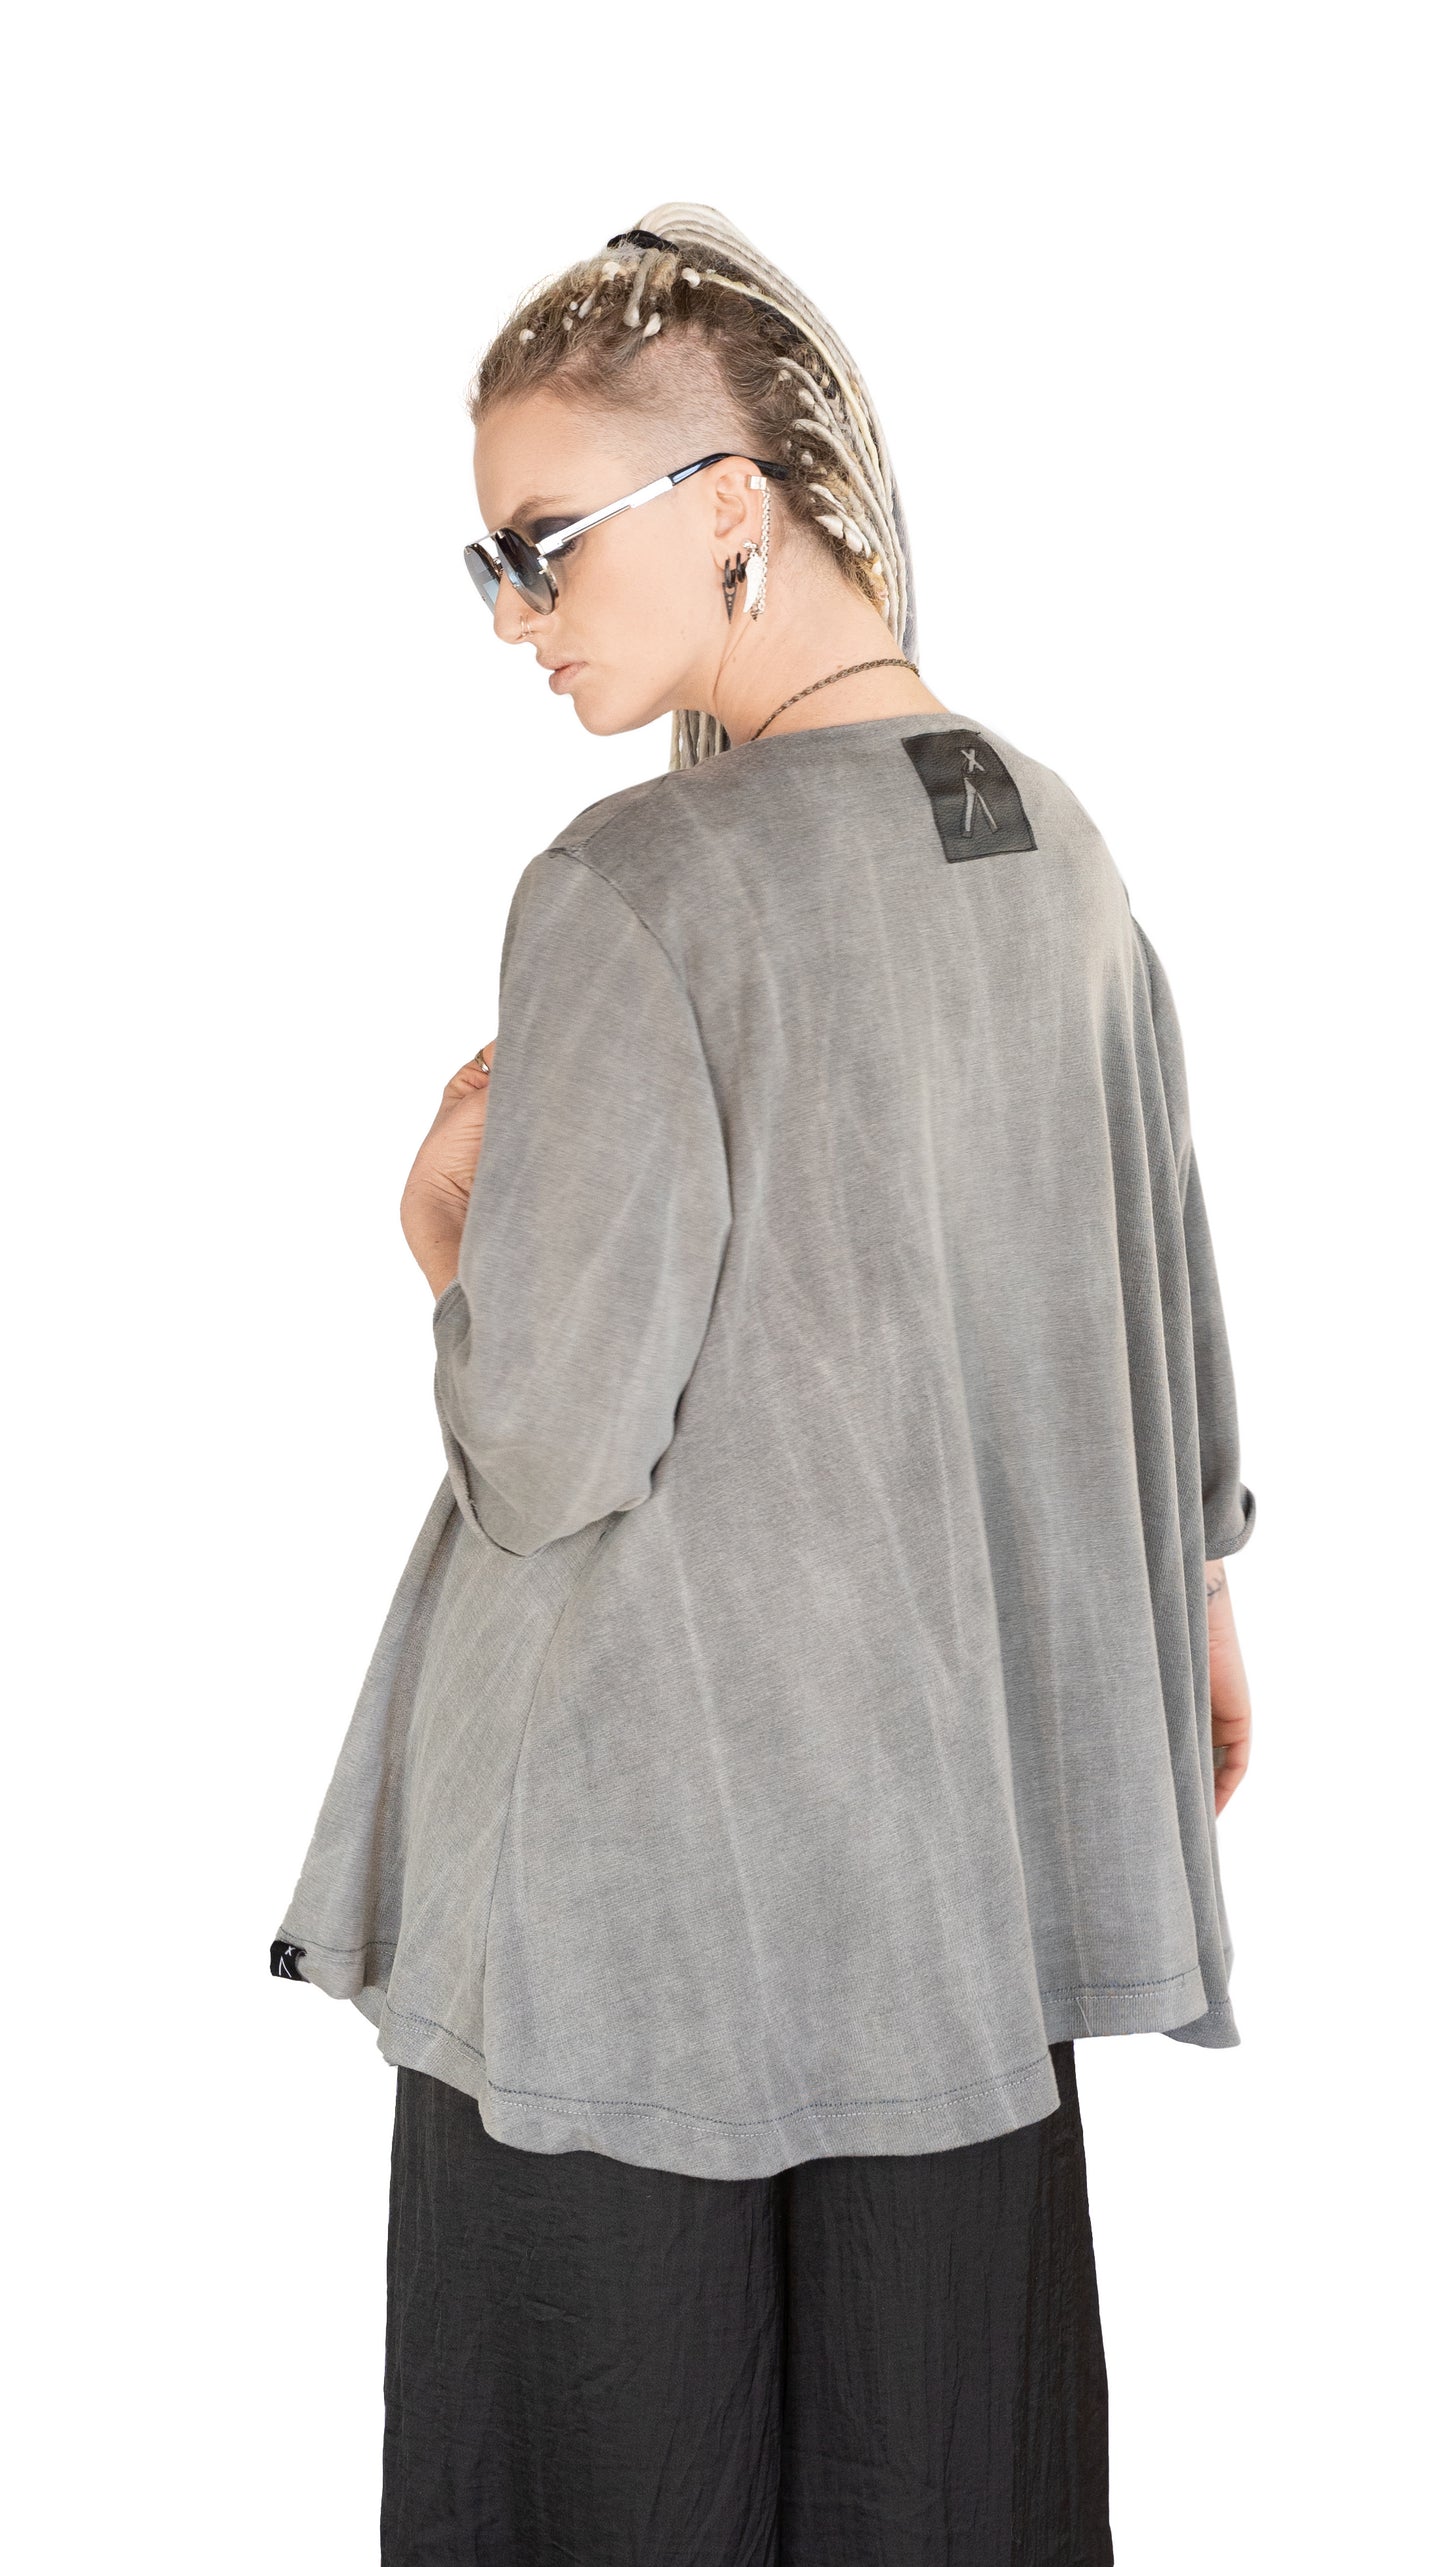 Distressed faded gray lightweight kimono cardigan